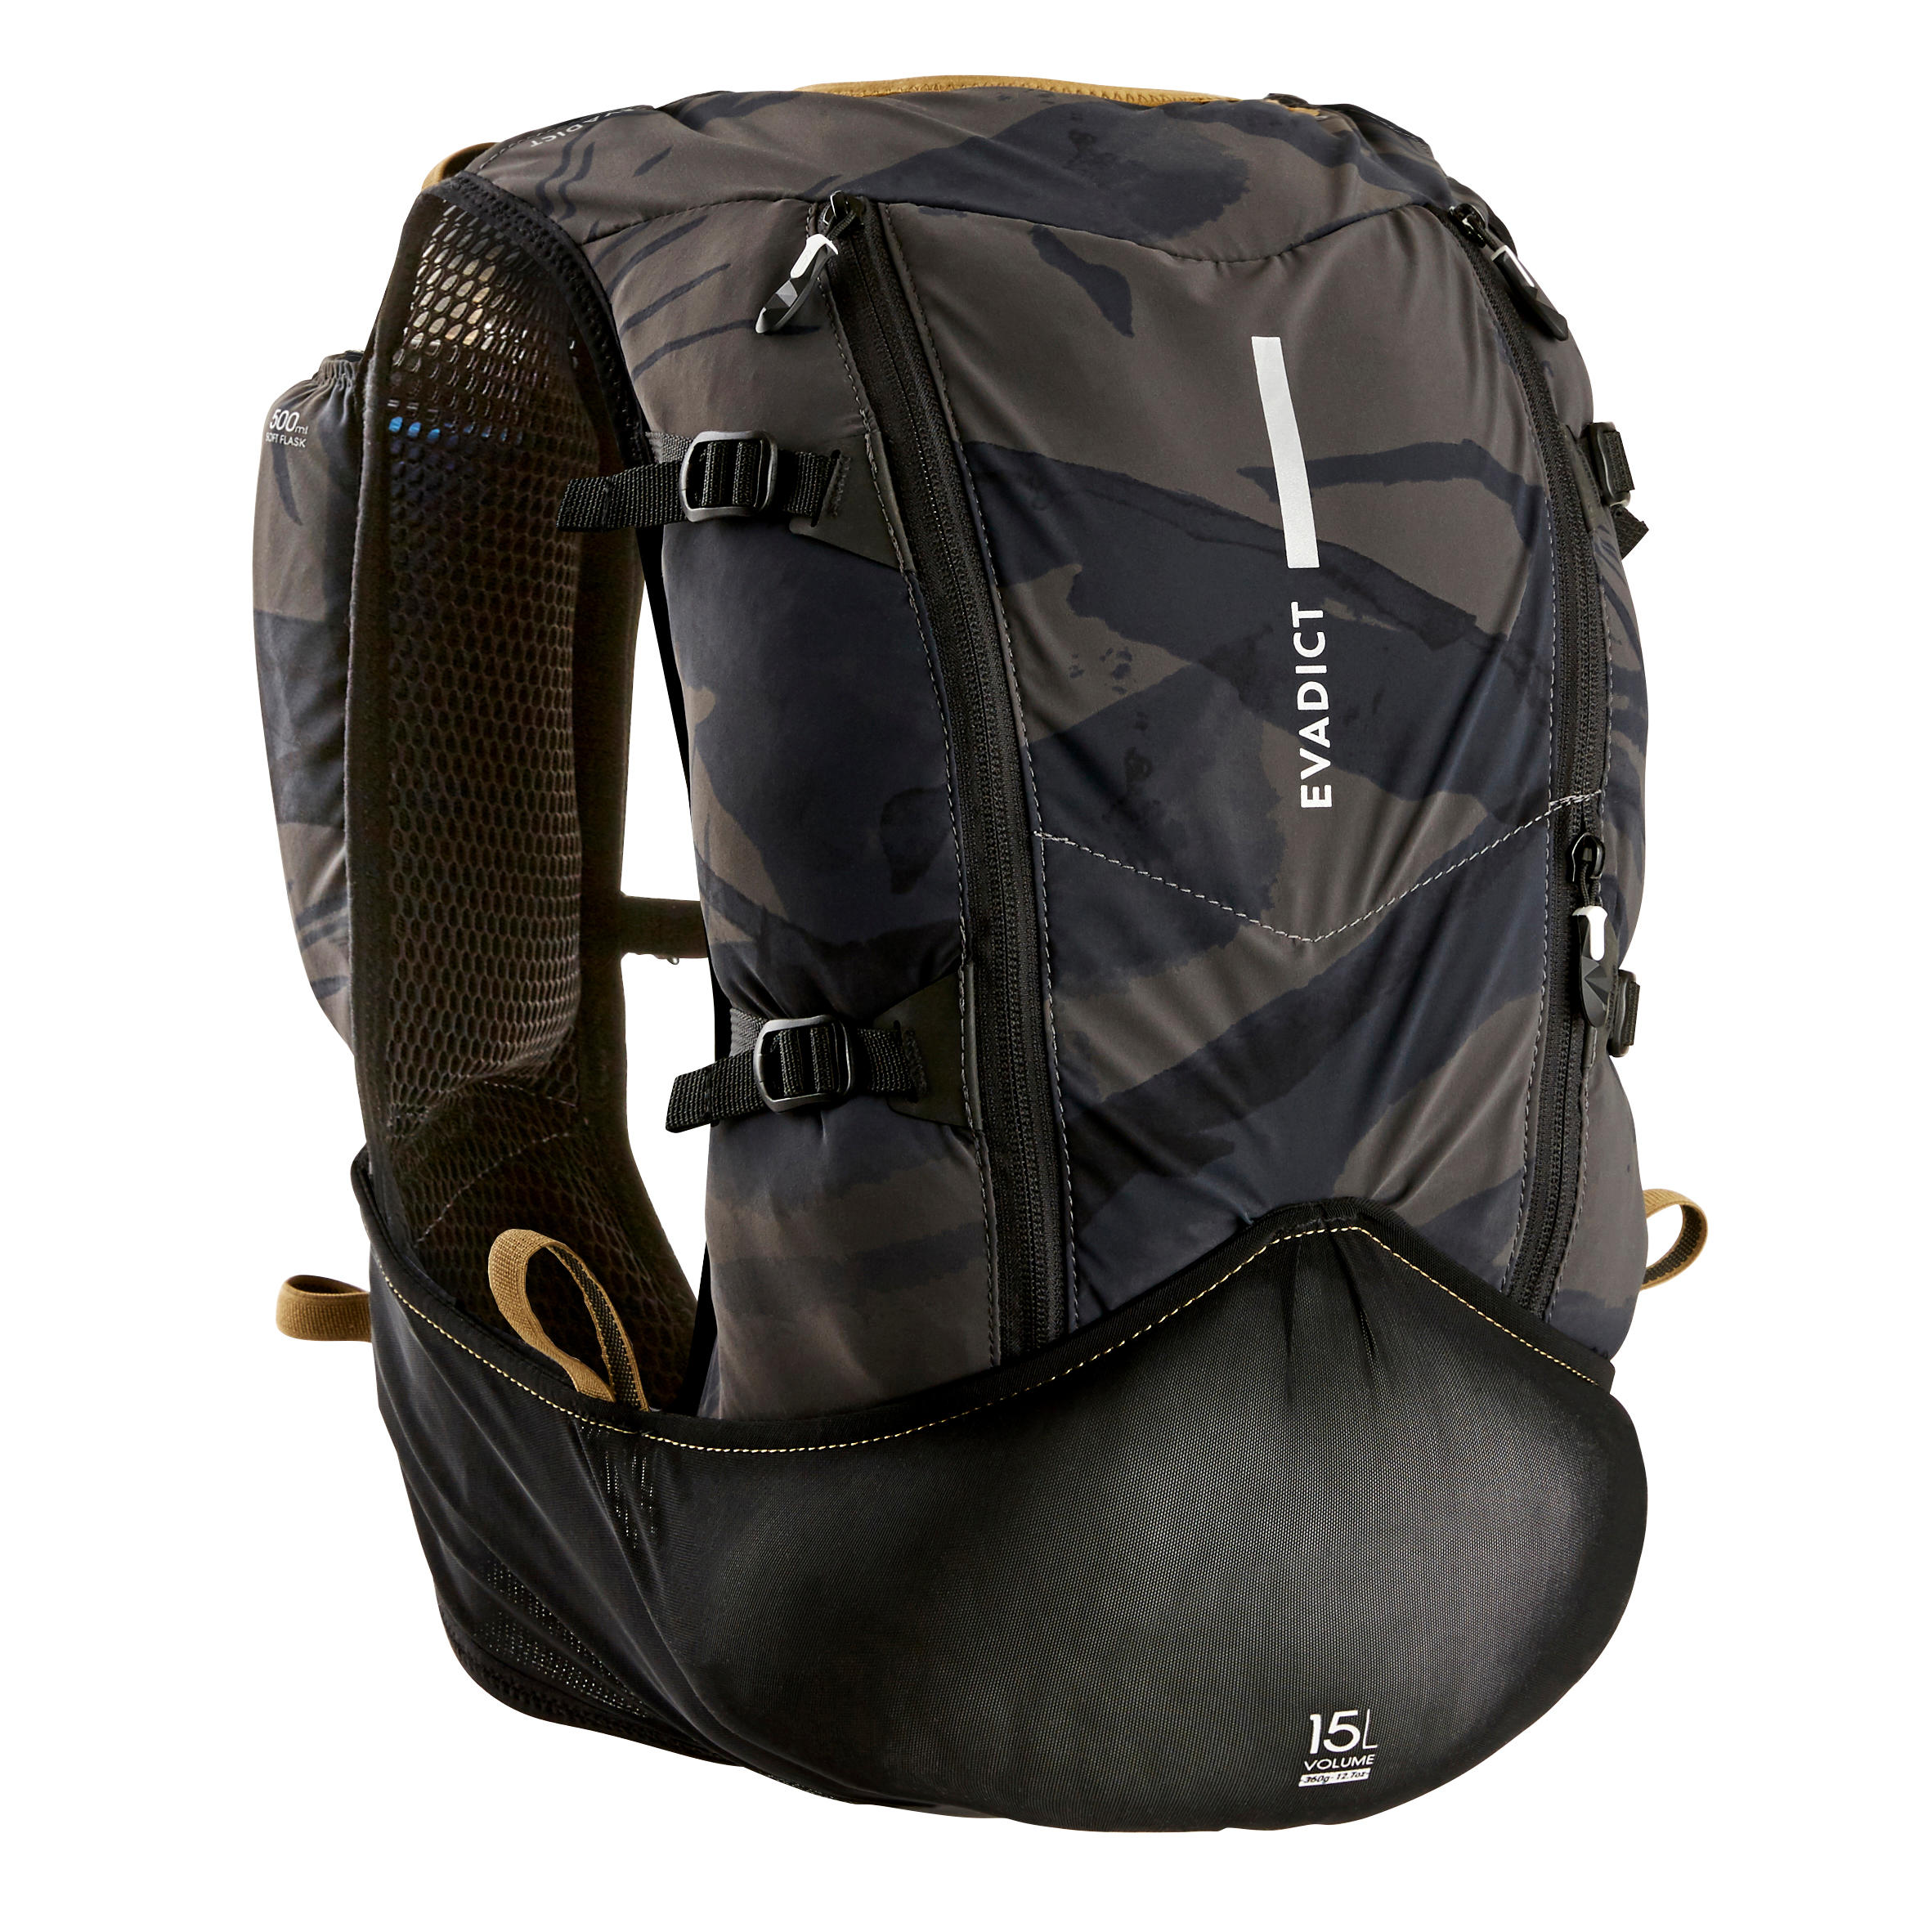 kalenji 15l ultra trail running bag review